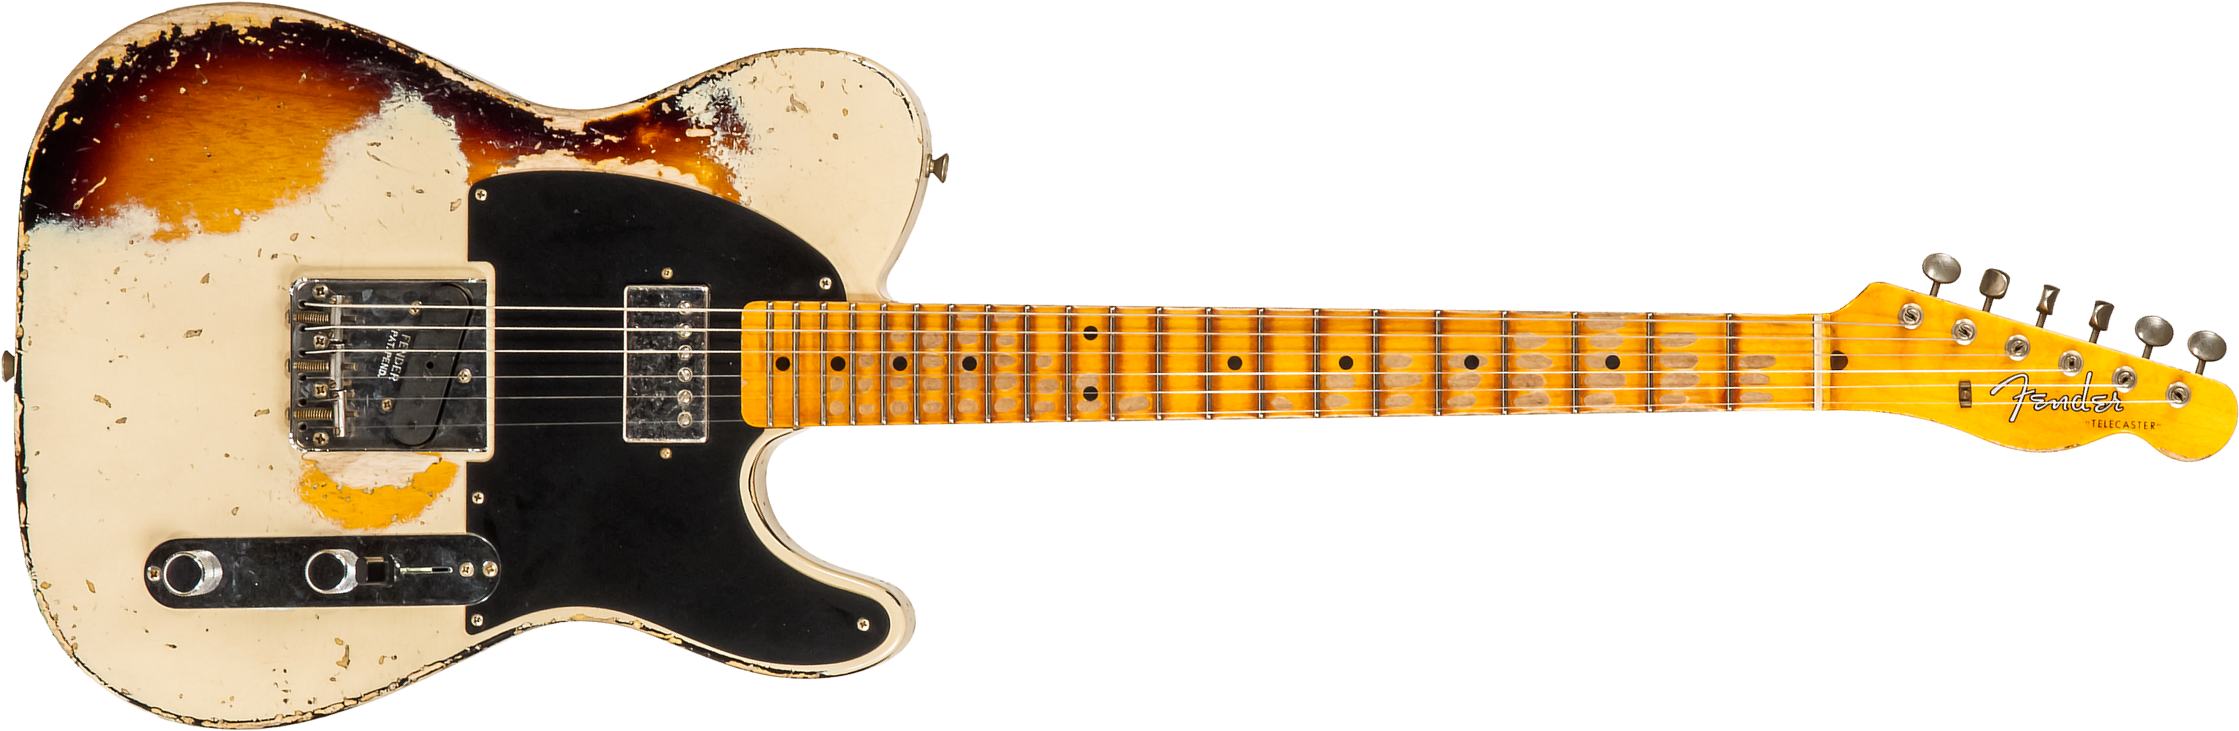 Fender Custom Shop Tele 1957 Sh Ht Mn #r117579 - Heavy Relic Desert Sand Ov. Sunburst - Tel shape electric guitar - Main picture